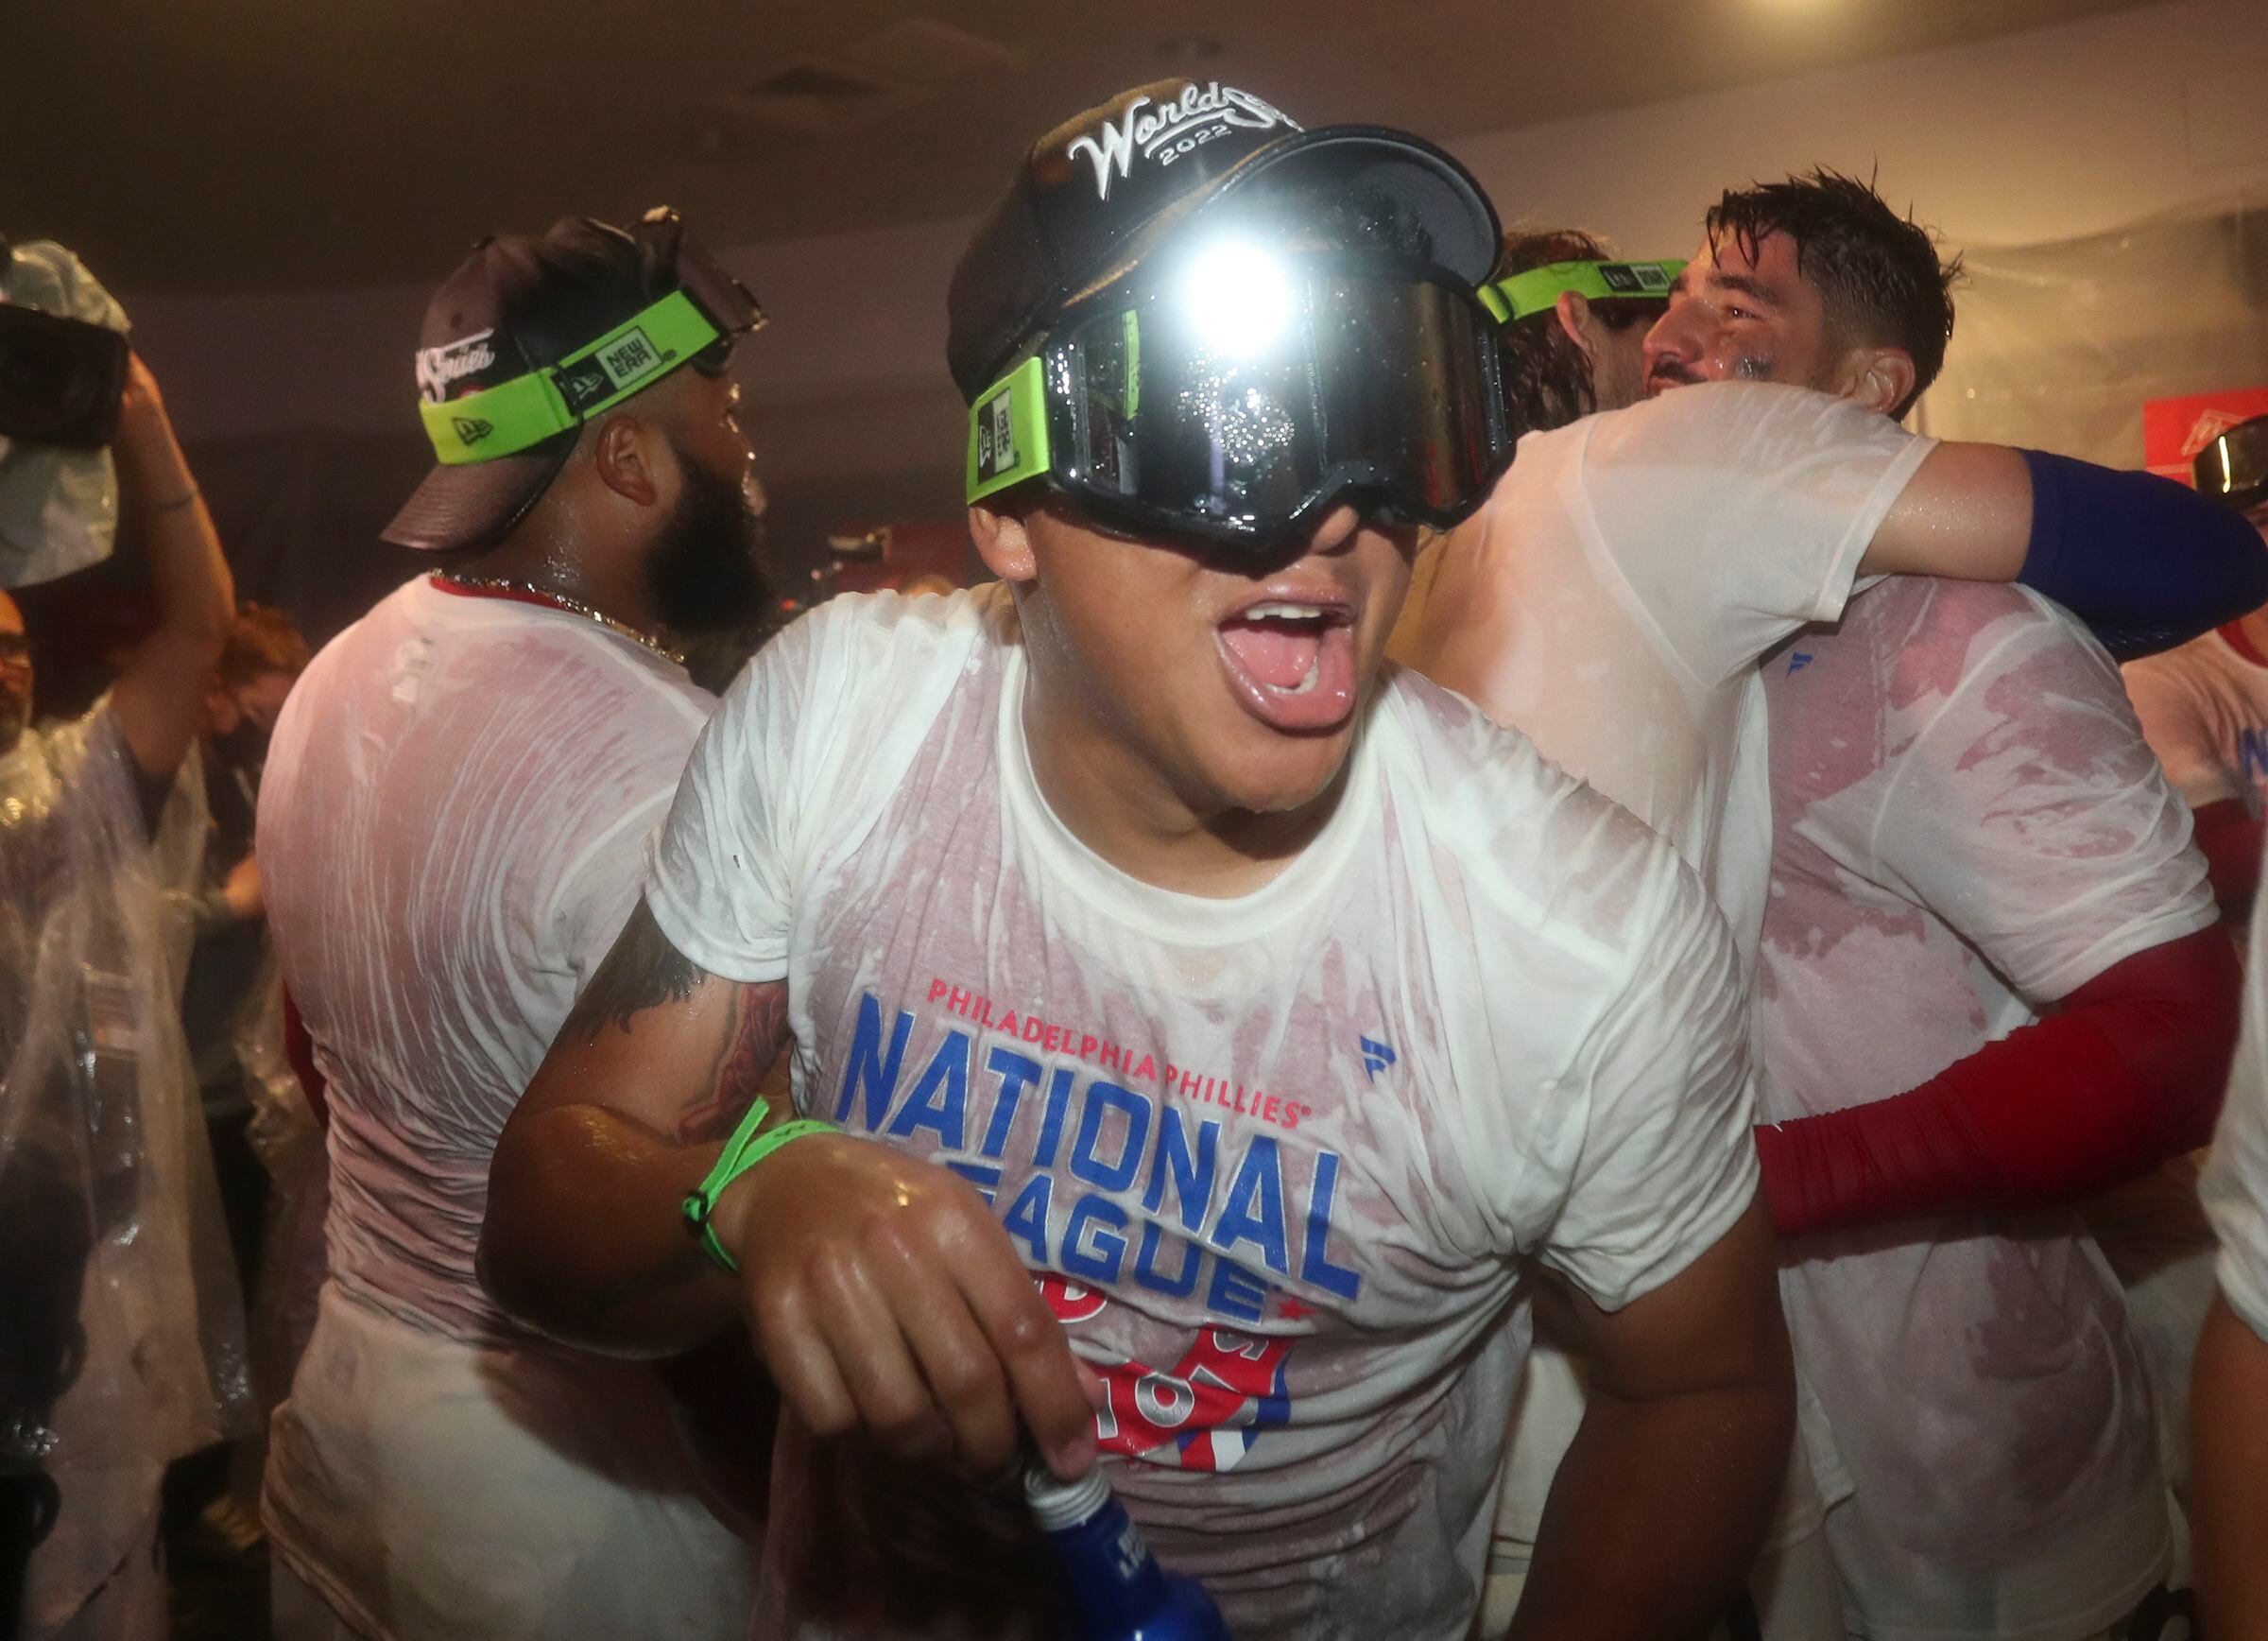 World Series Phillies pitcher Ranger Suárez is unusually chill